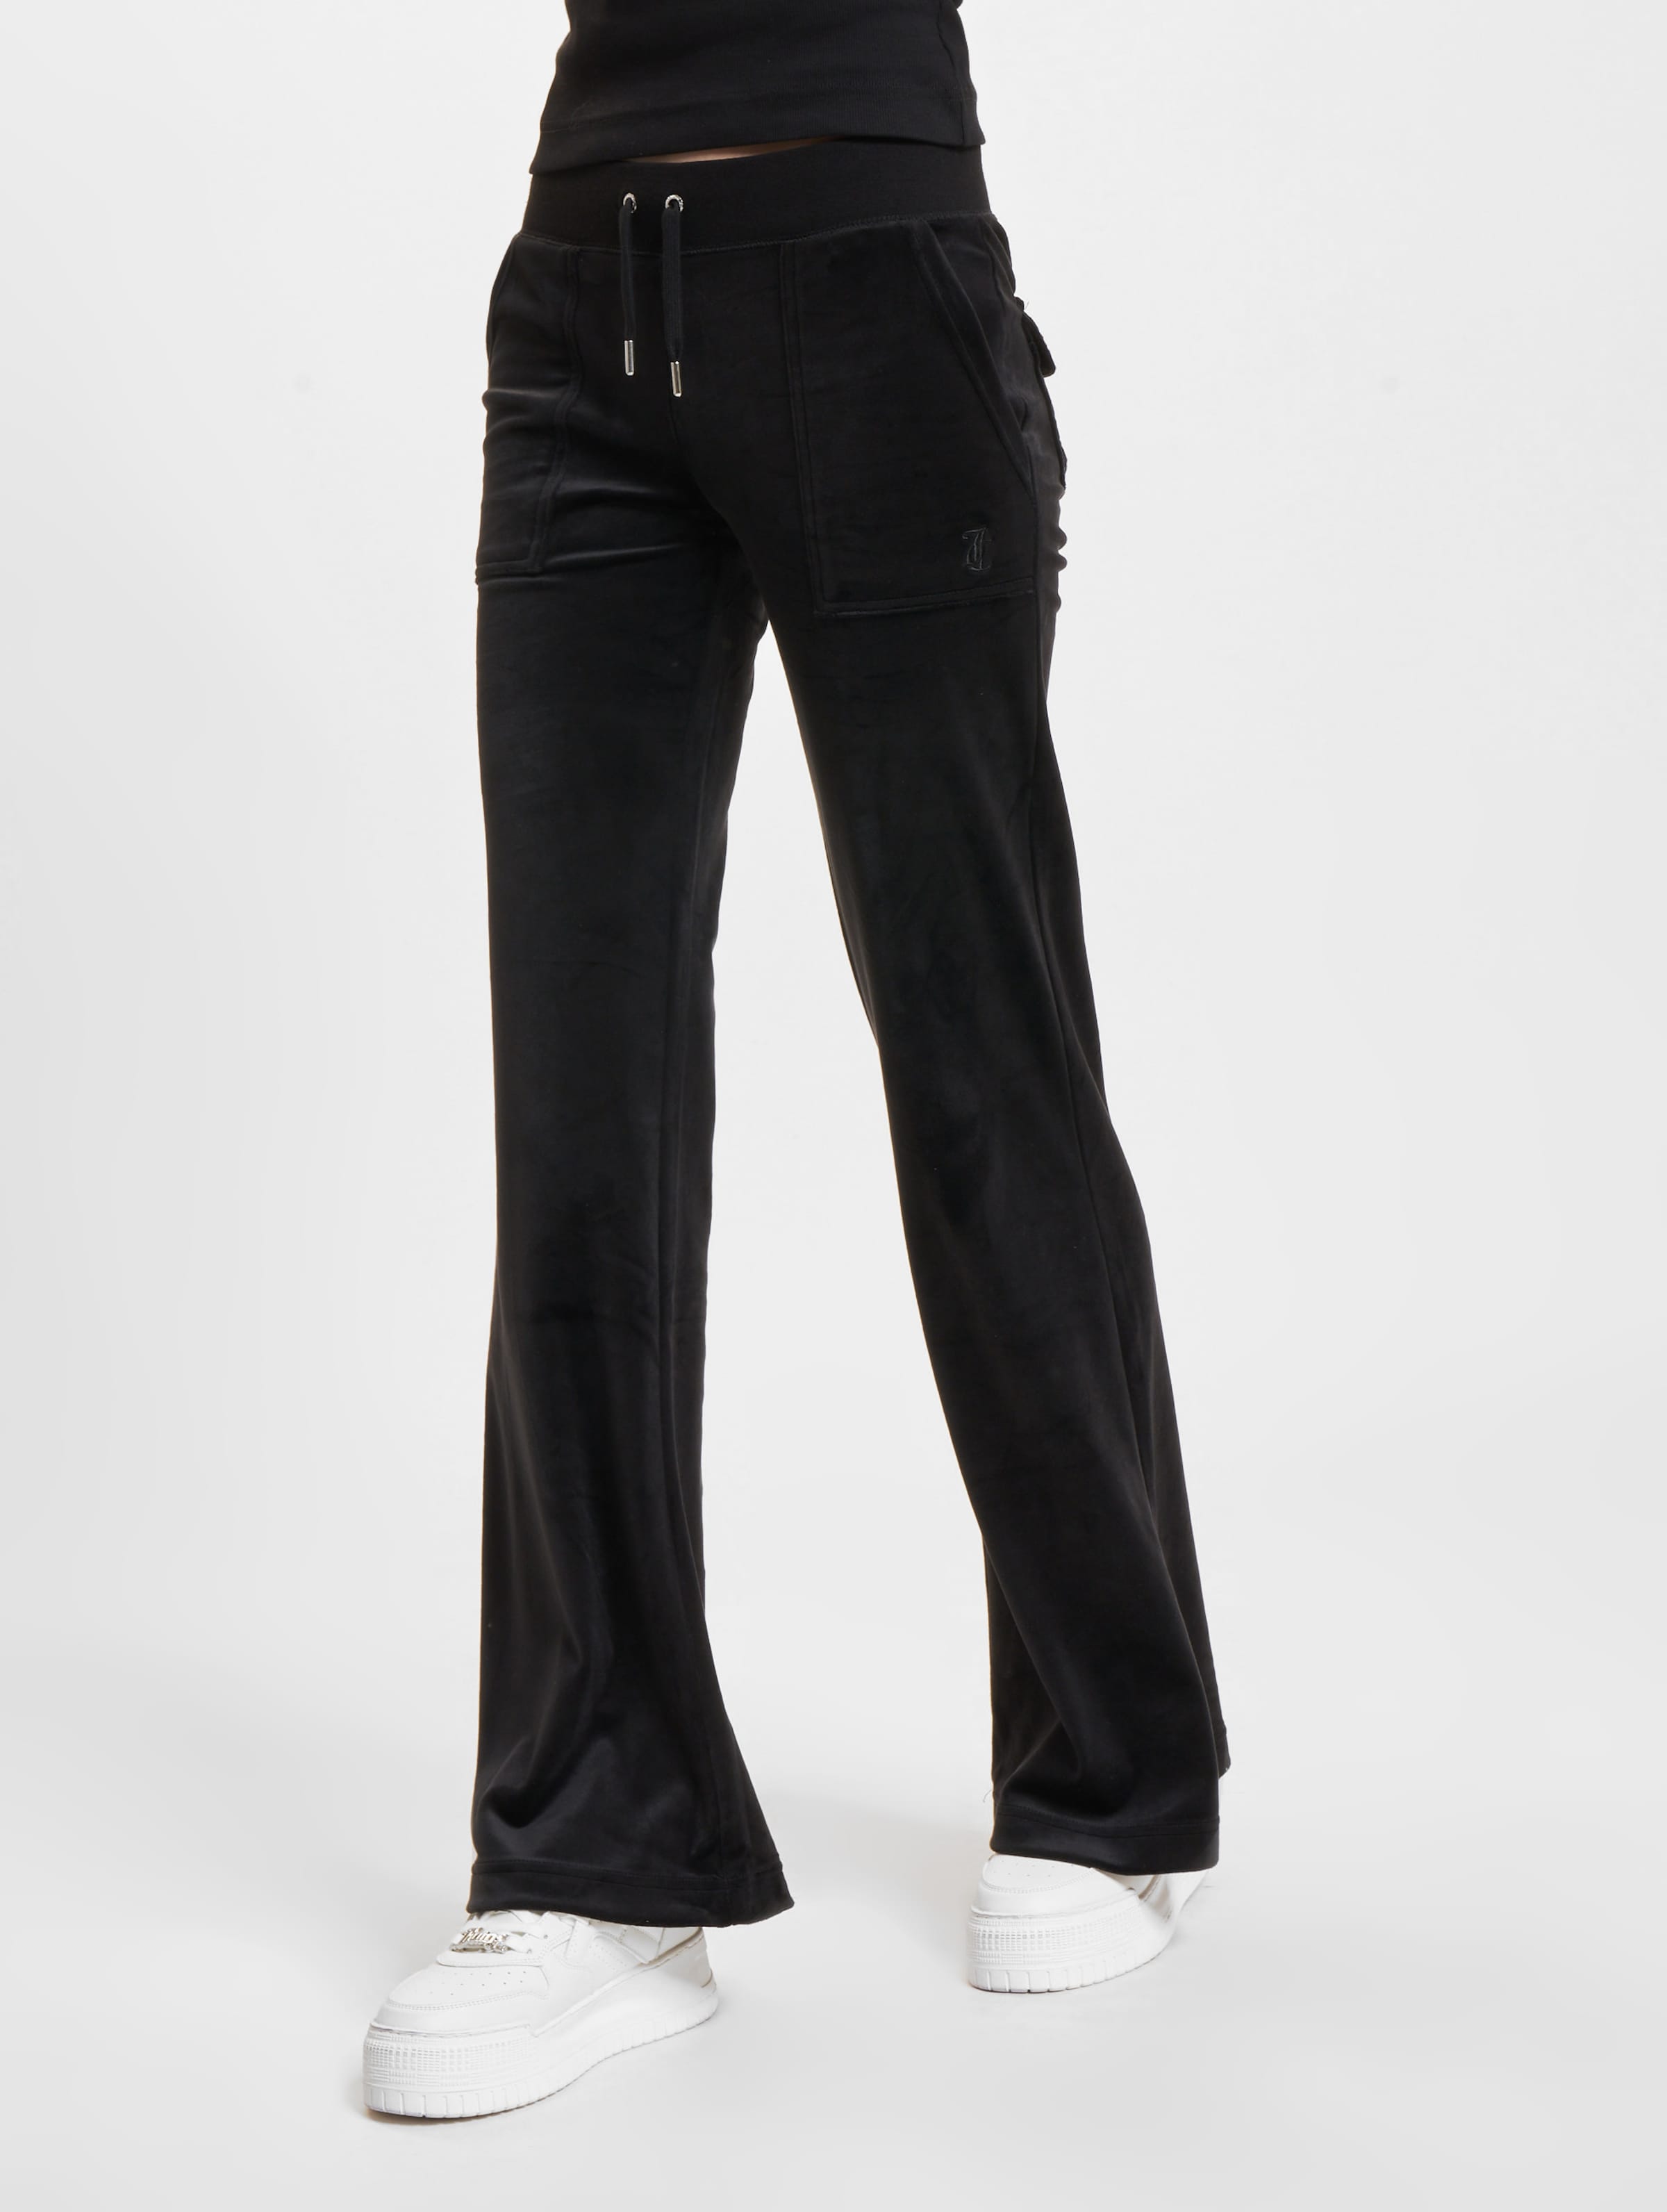 Juicy Couture Layla Pocket Low Rise Jogginghose Frauen,Unisex op kleur zwart, Maat M